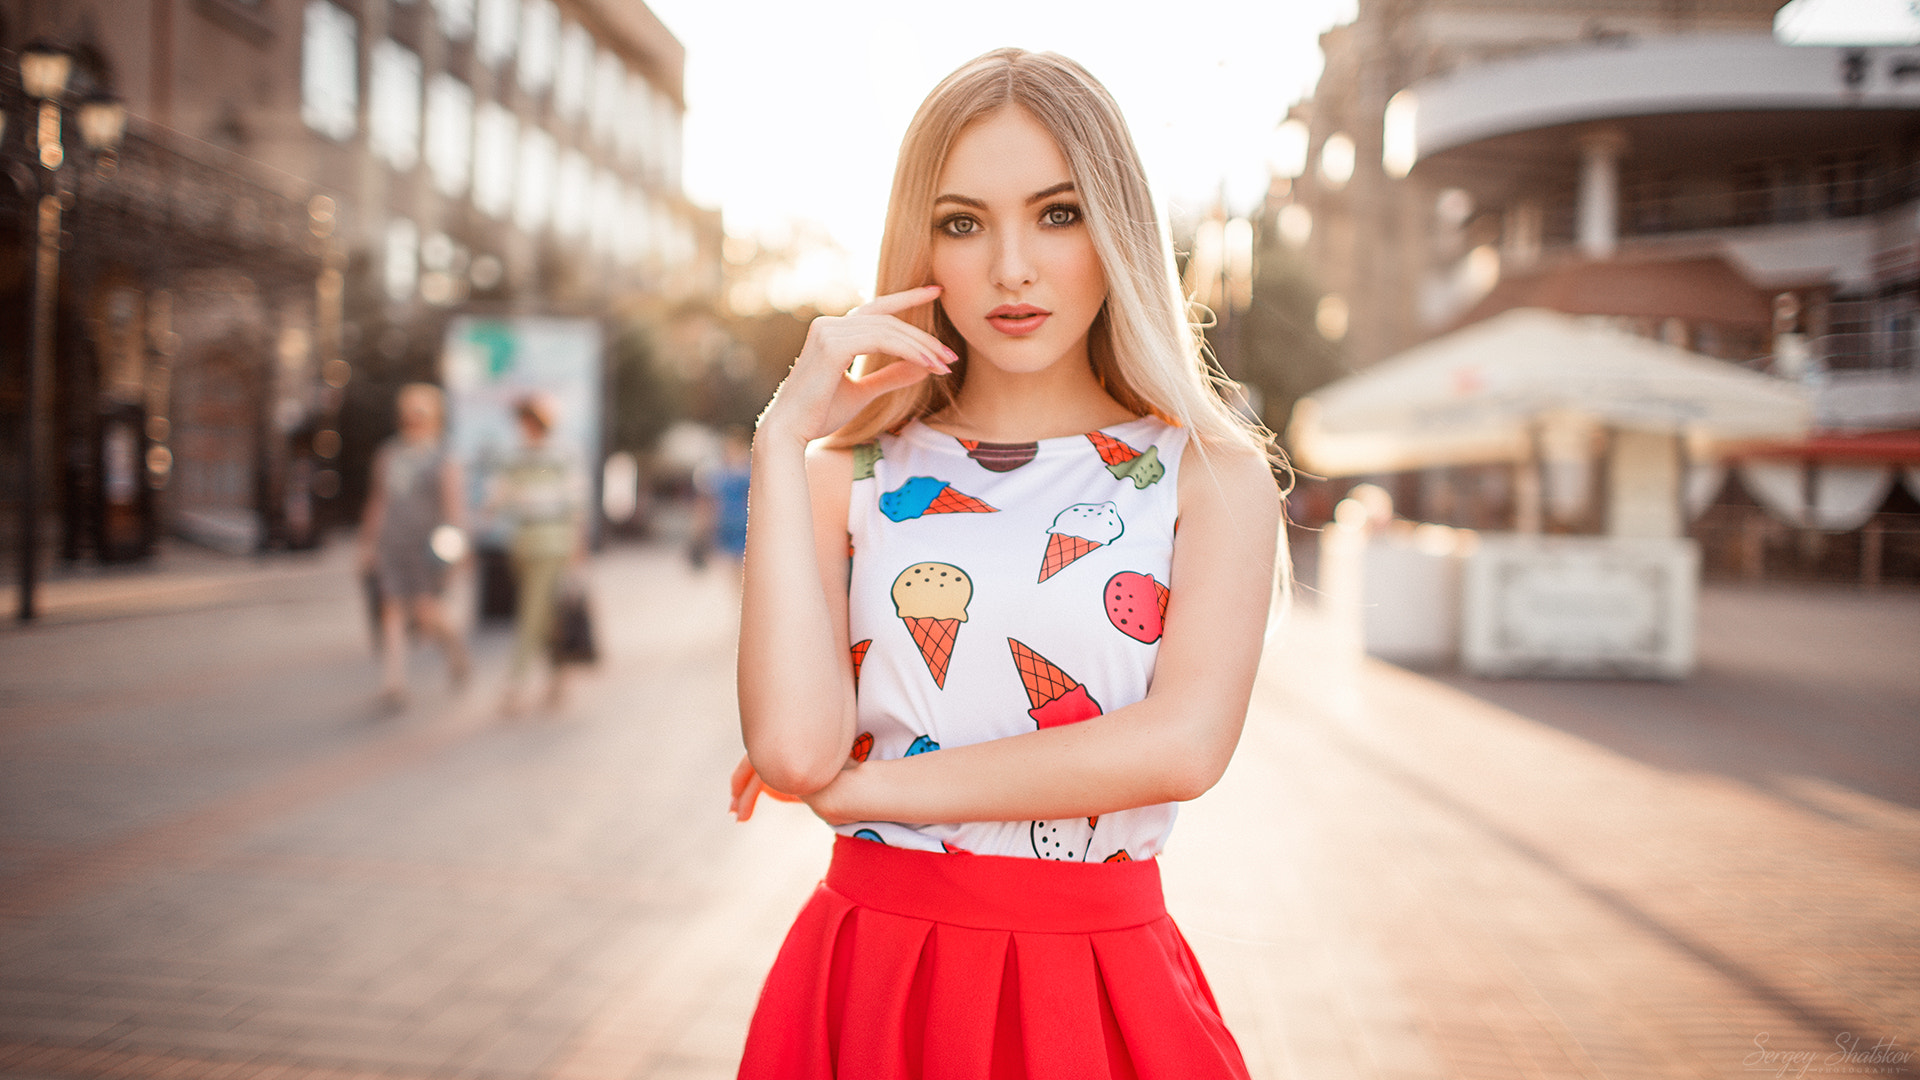 Women Model Sergey Shatskov Women Outdoors City Red Blonde Urban Red Skirt Make Up Makeup 1920x1080